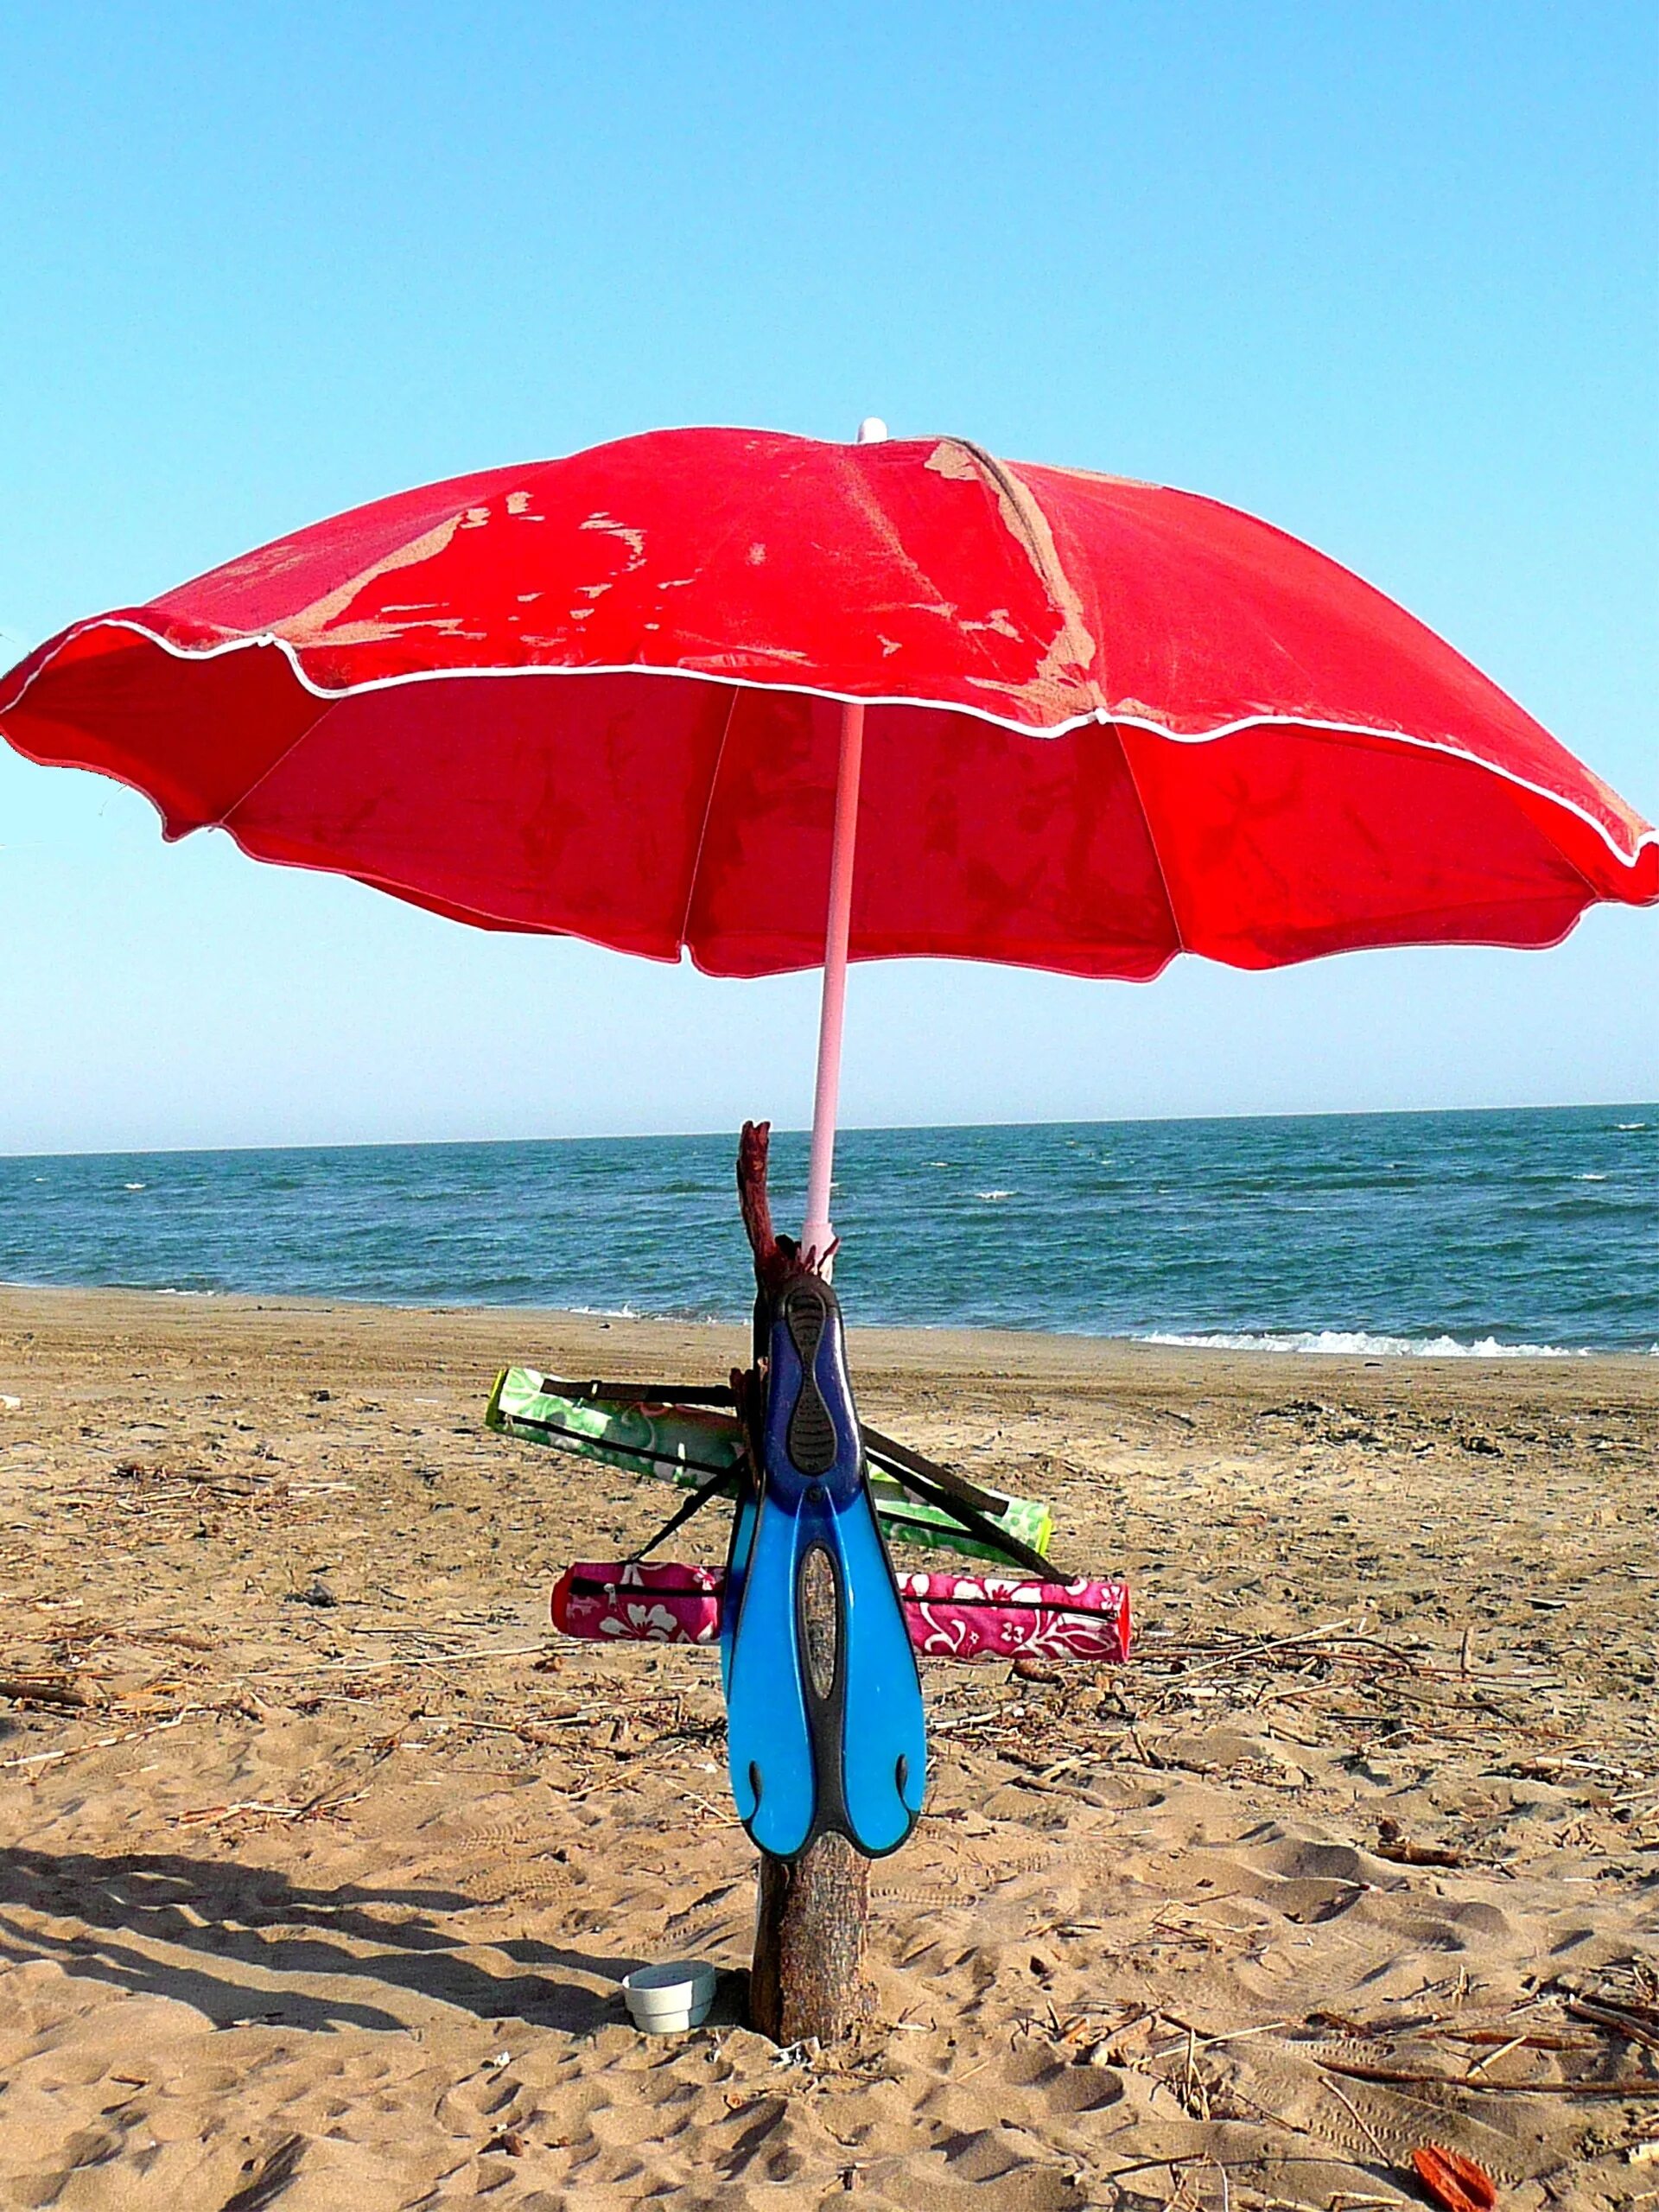 Зонт для пляжа. Зонтик на пляже. Зонт от солнца. Пляжный зонт на пляже. Морской зонтик